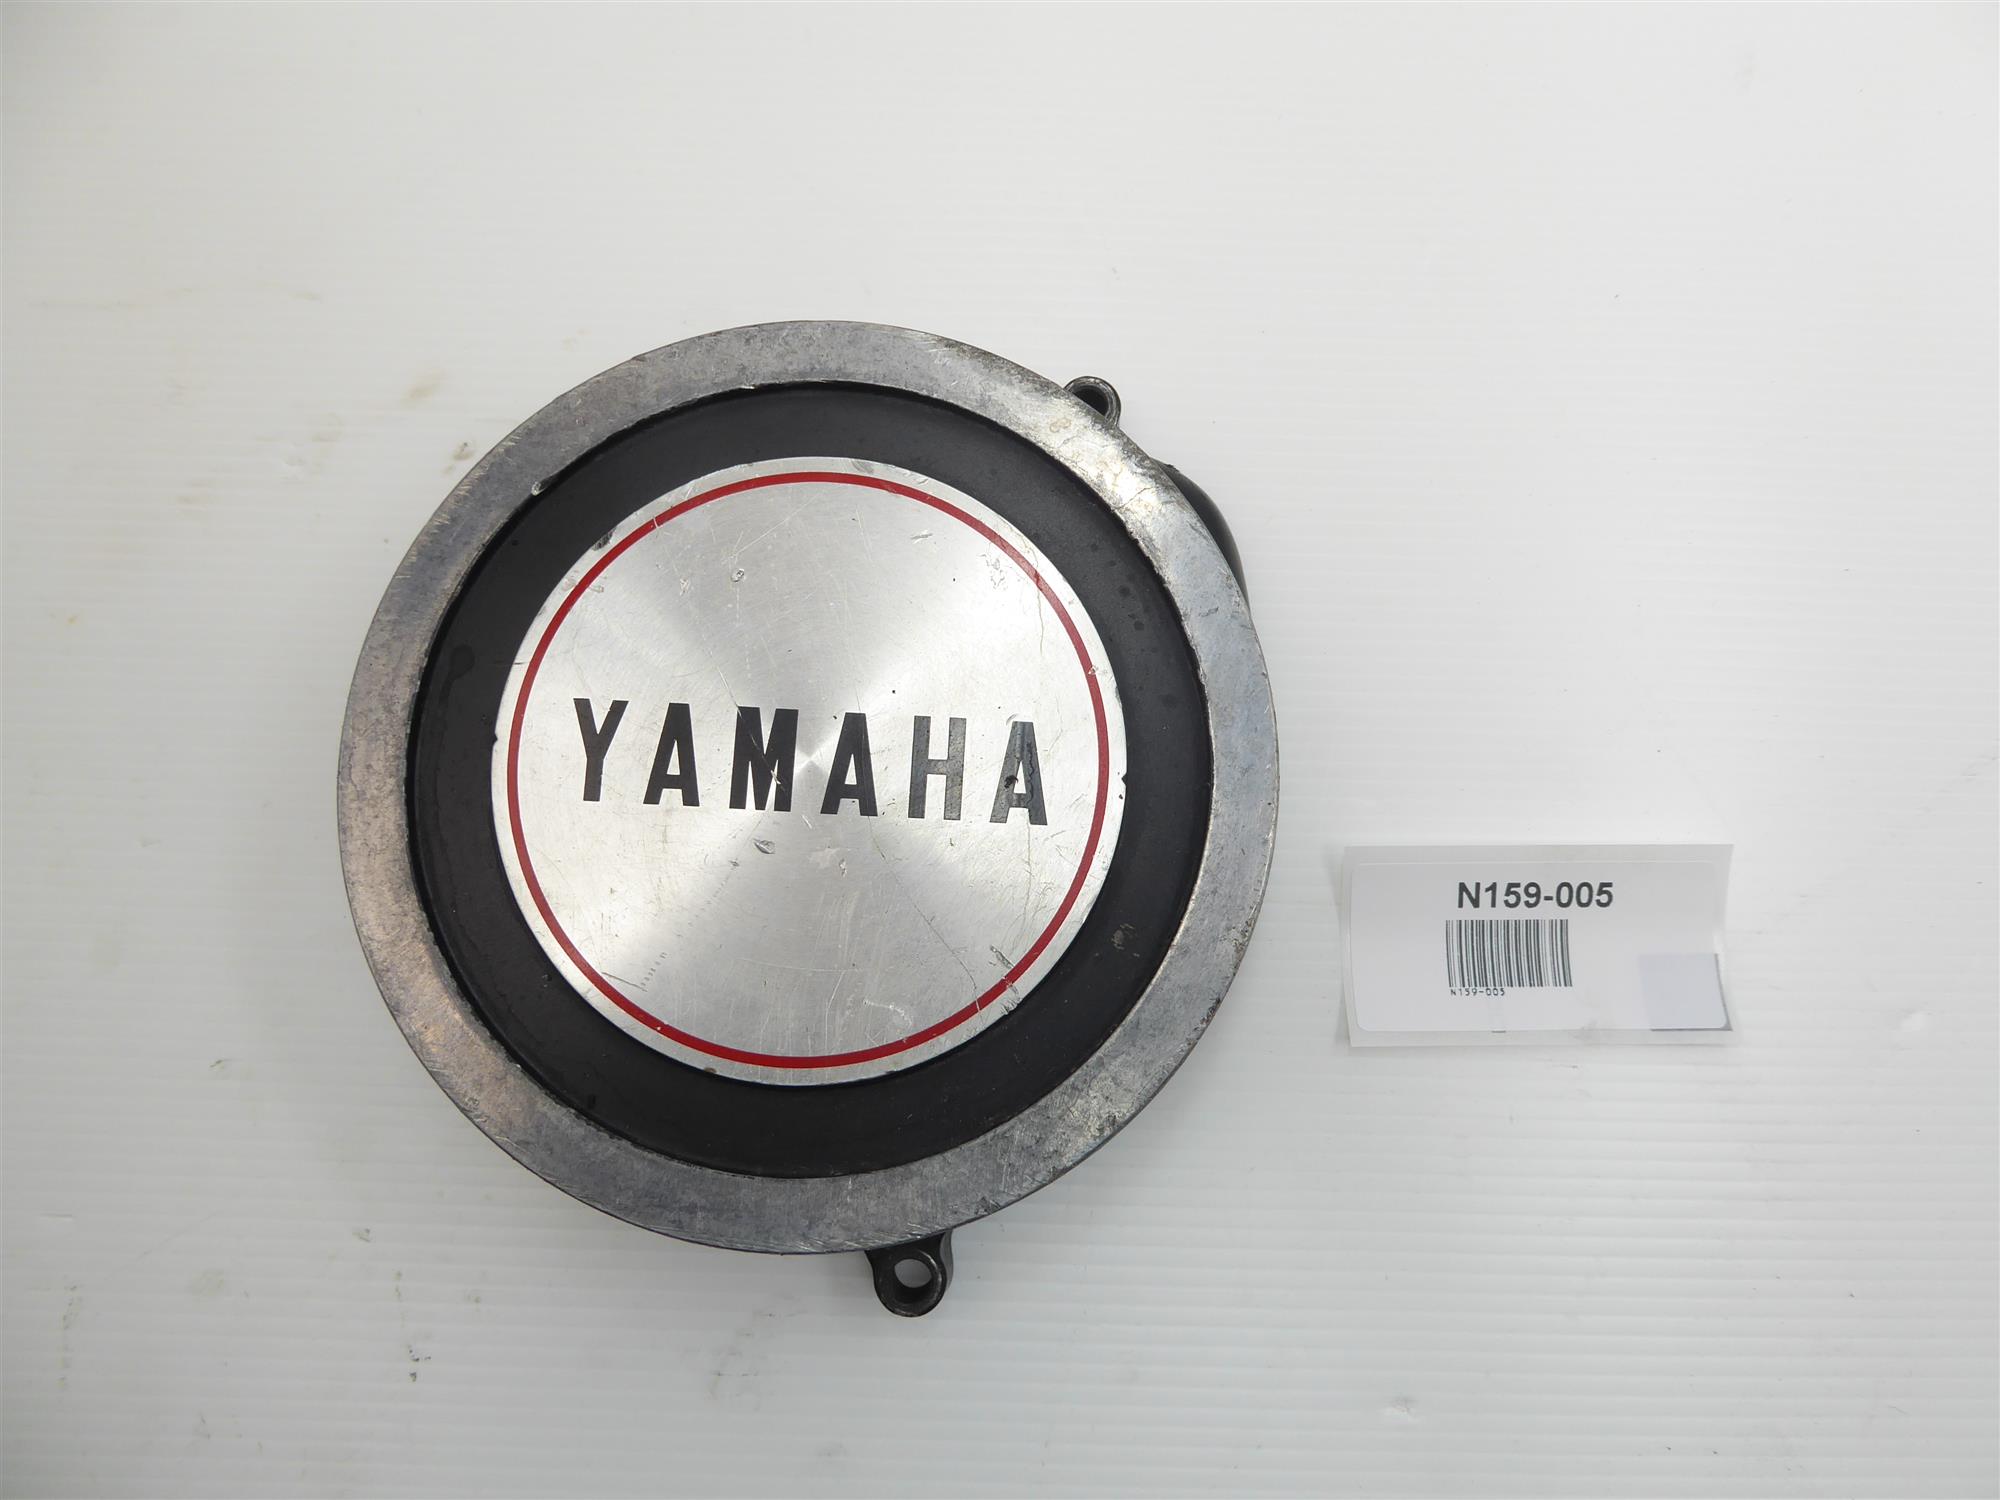 Yamaha RD 250 73-79 Alternator cover 360-15415-01-00